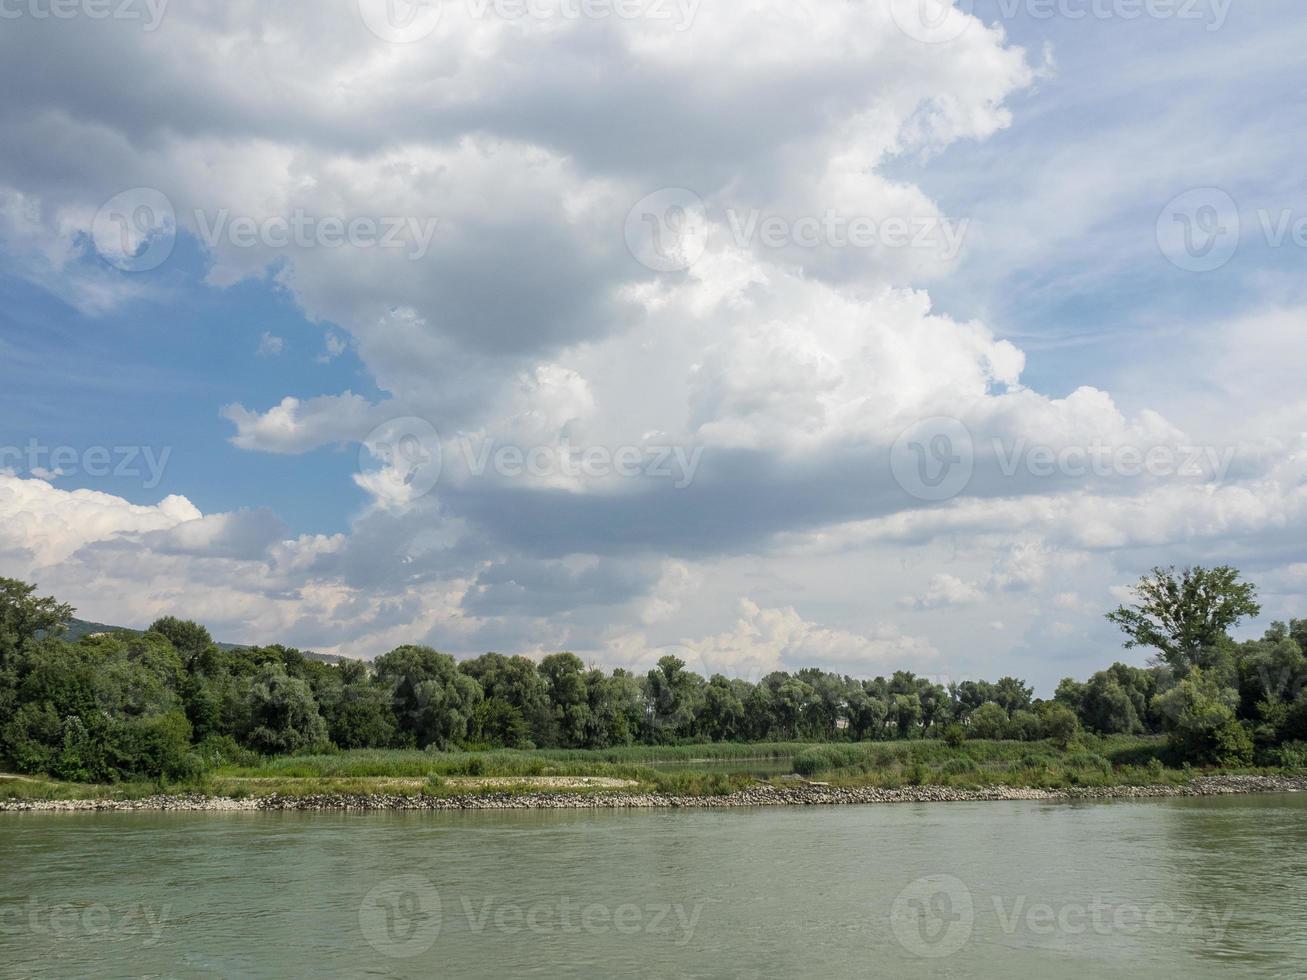 bratislava vid floden Donau foto